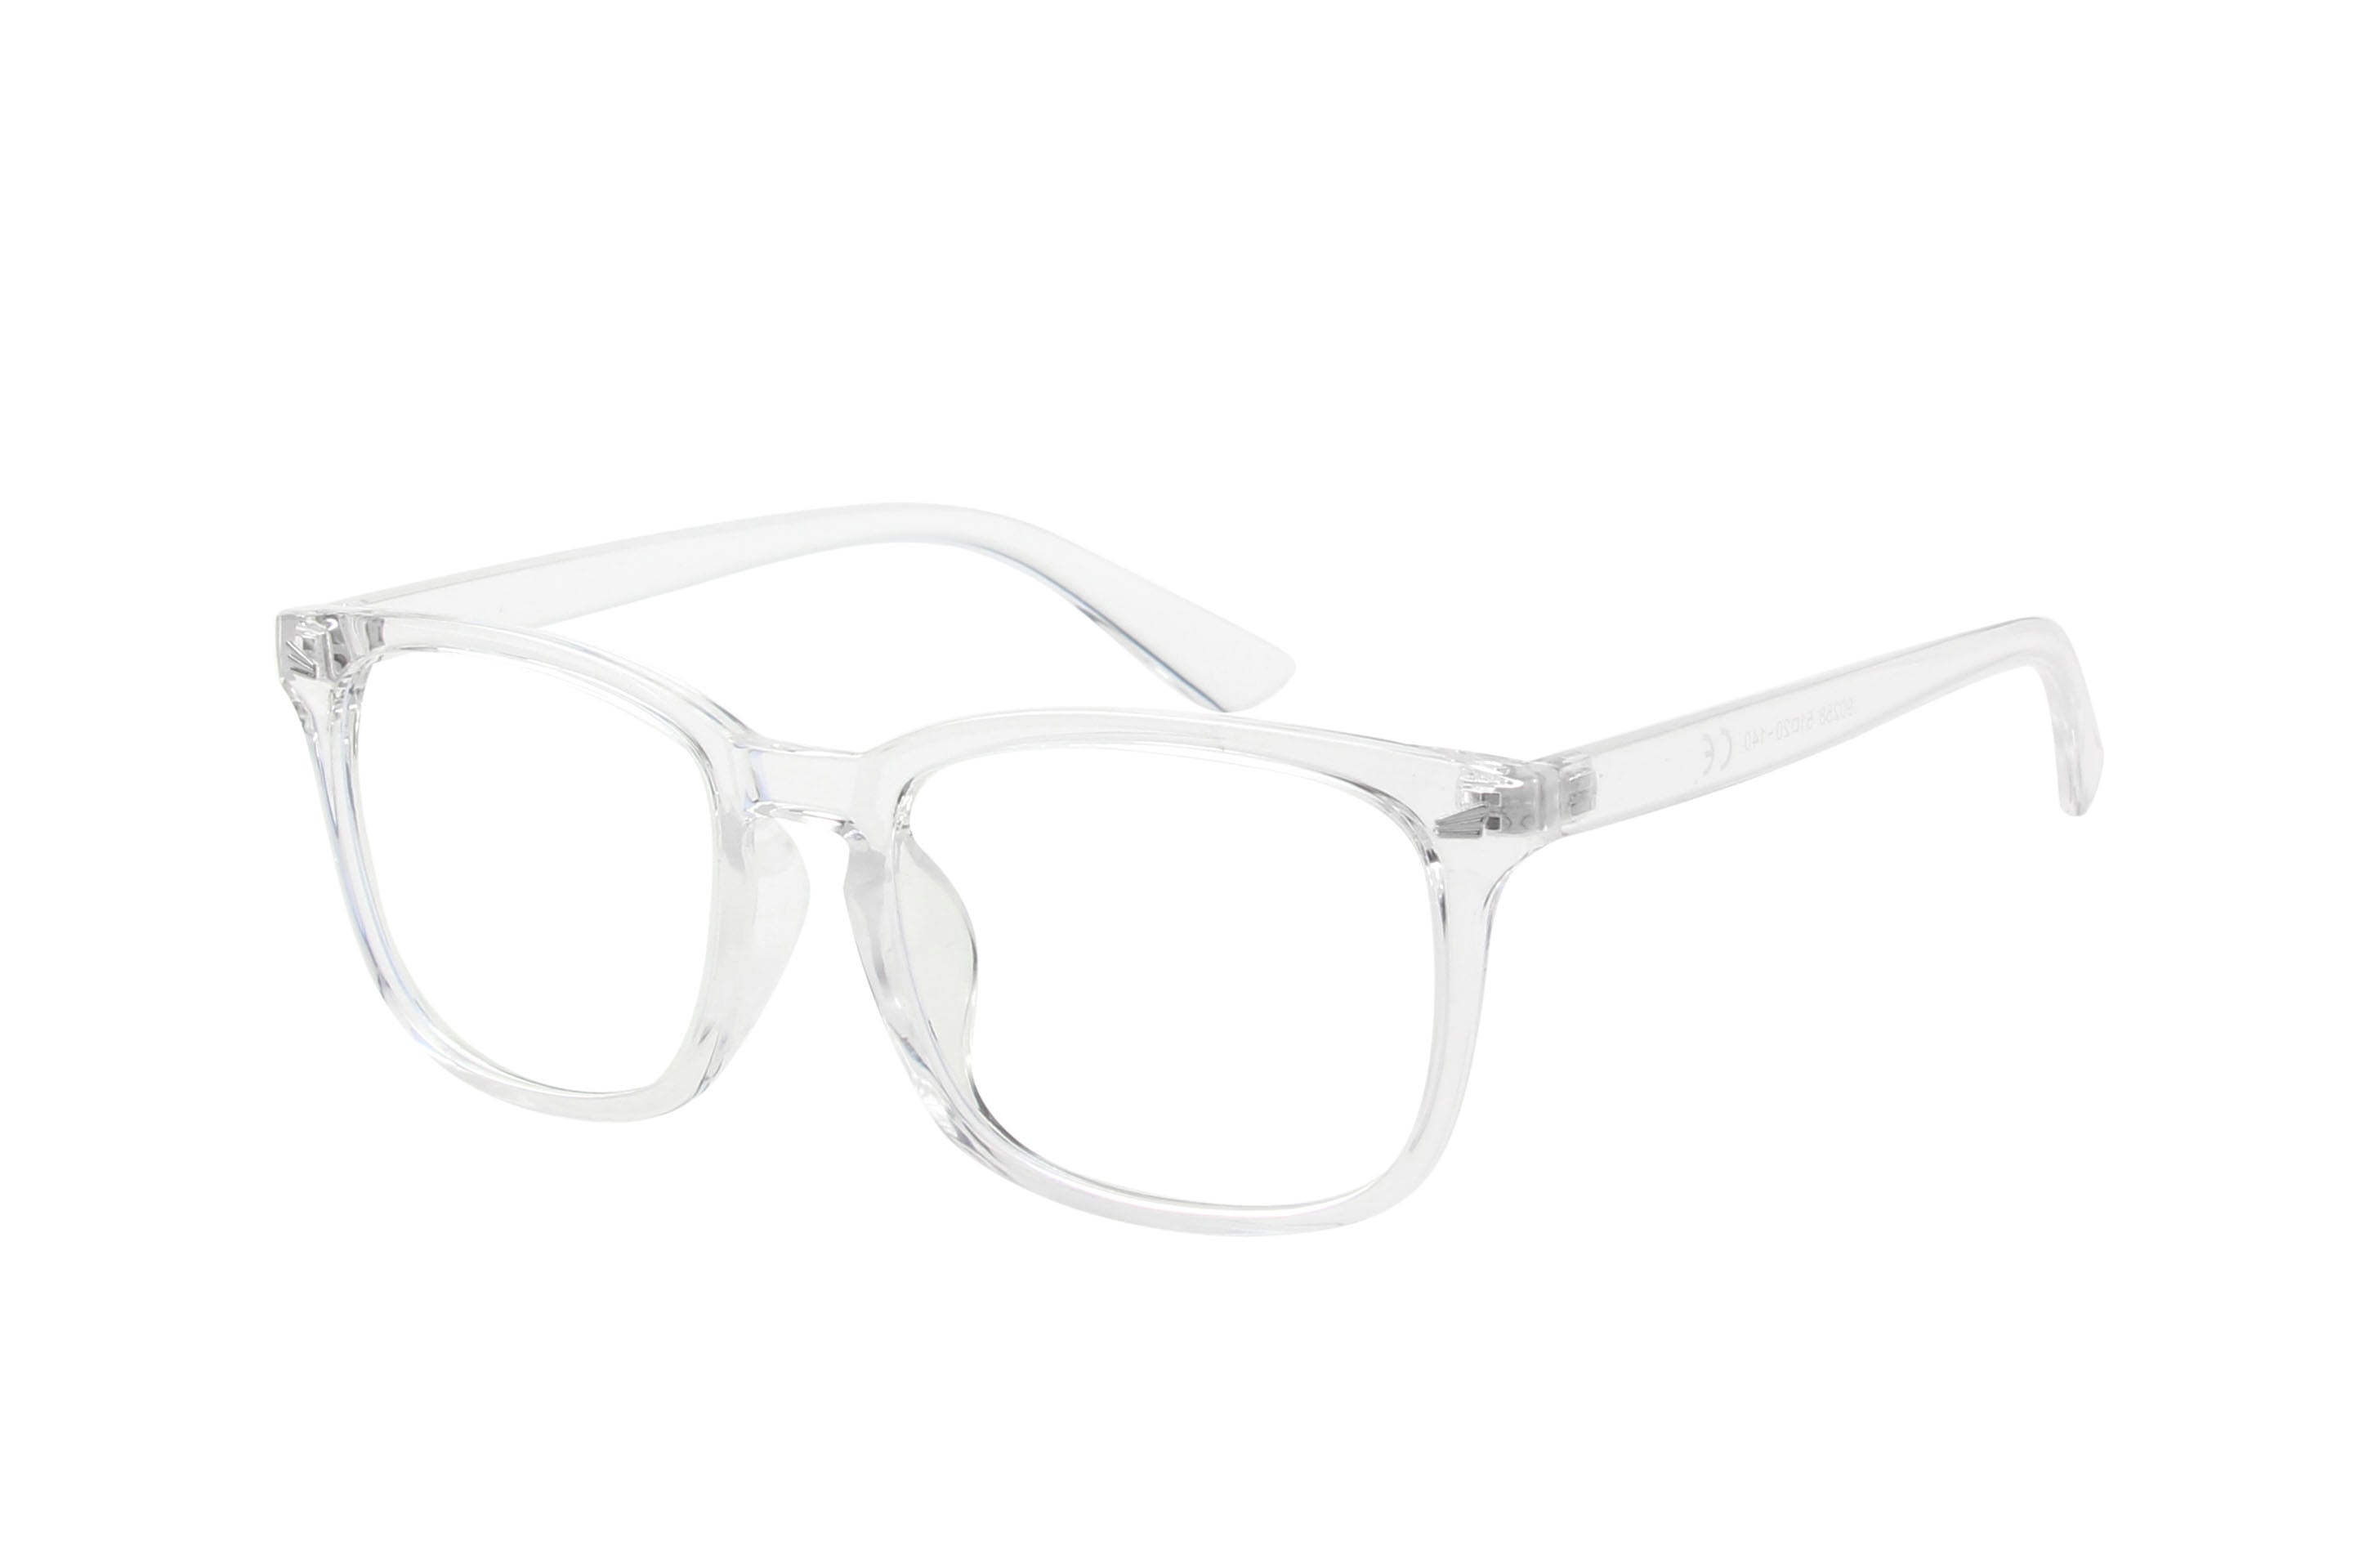 S1149 - Classic Rectangle Horn Rimmed Blue Light Blocker Glasses - Iris Fashion Inc. | Wholesale Sunglasses and Glasses